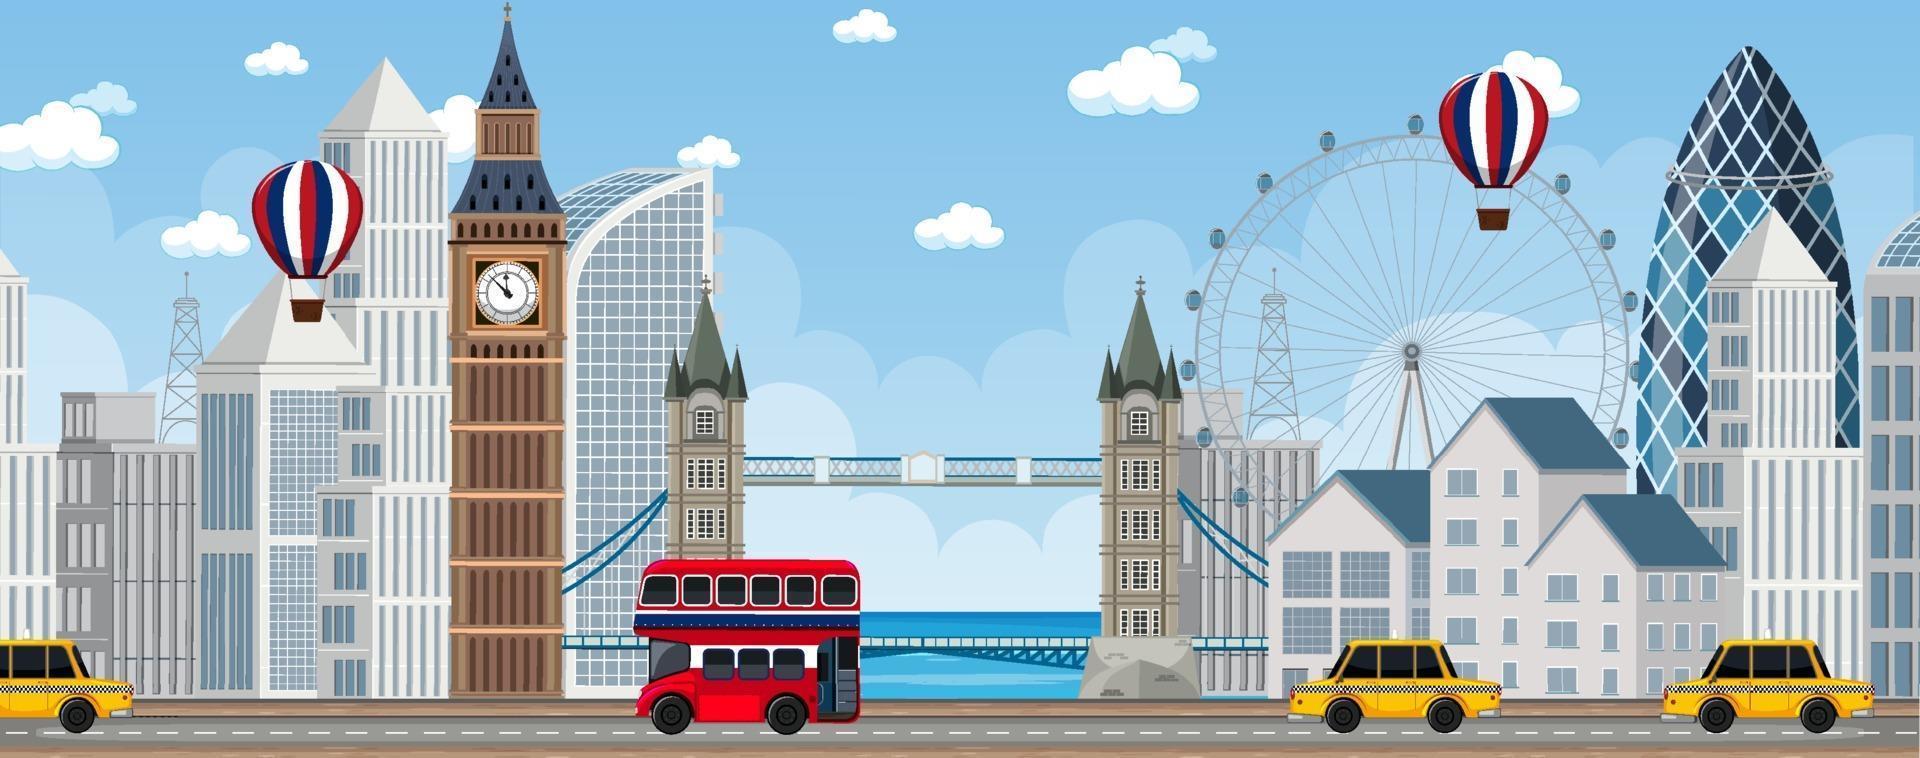 London city scene with many landmarks vector